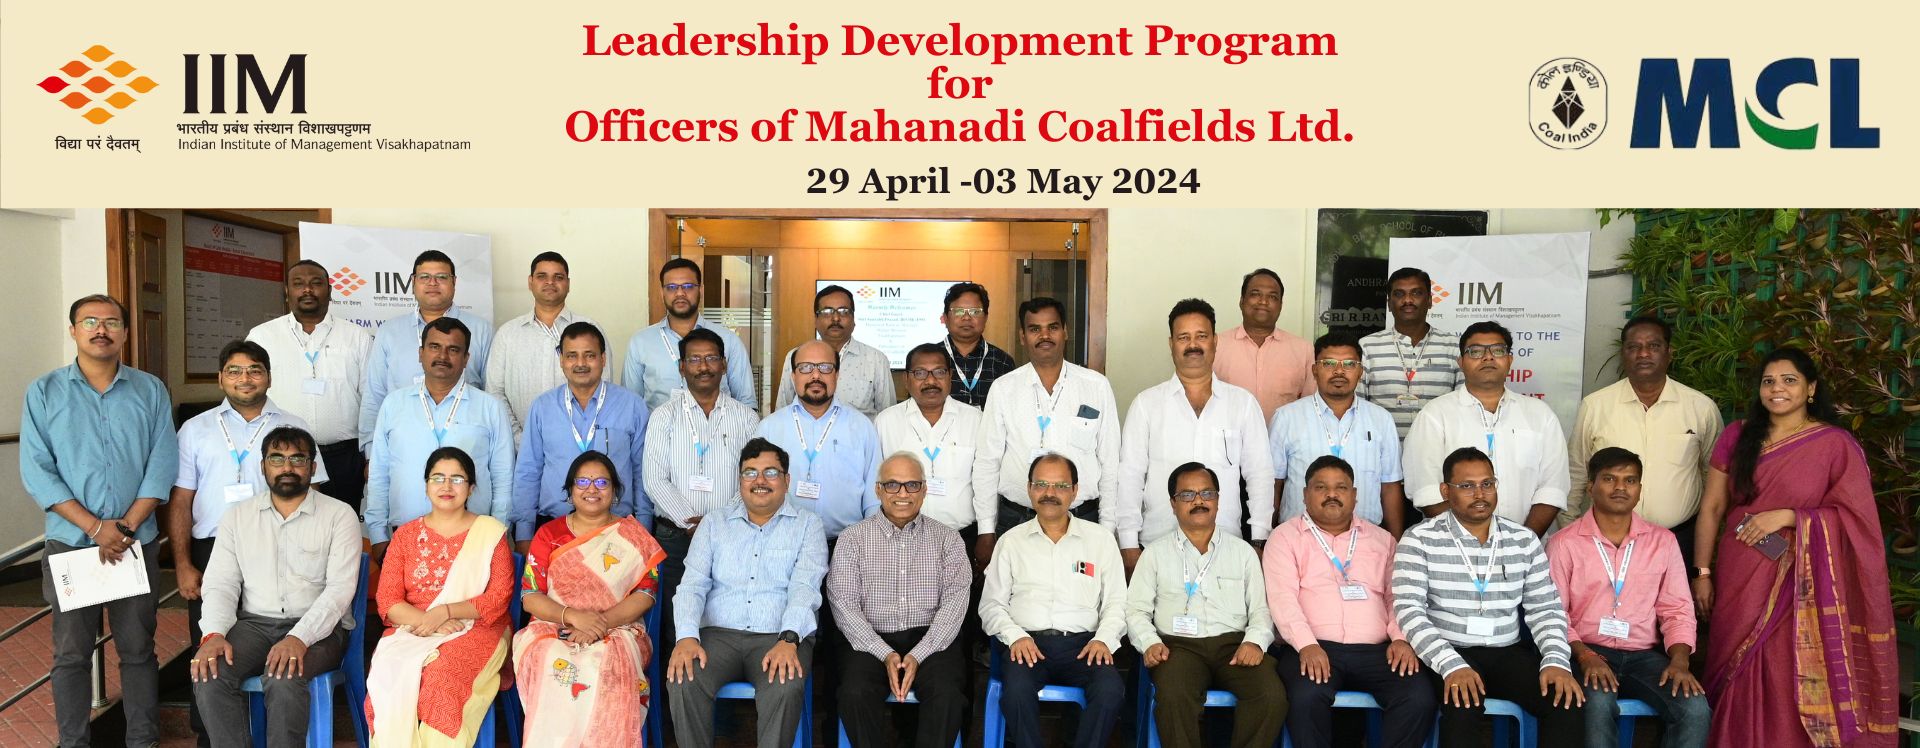 Inauguration of Leadership Development Program for Officers of Mahanadi Coalfields Ltd